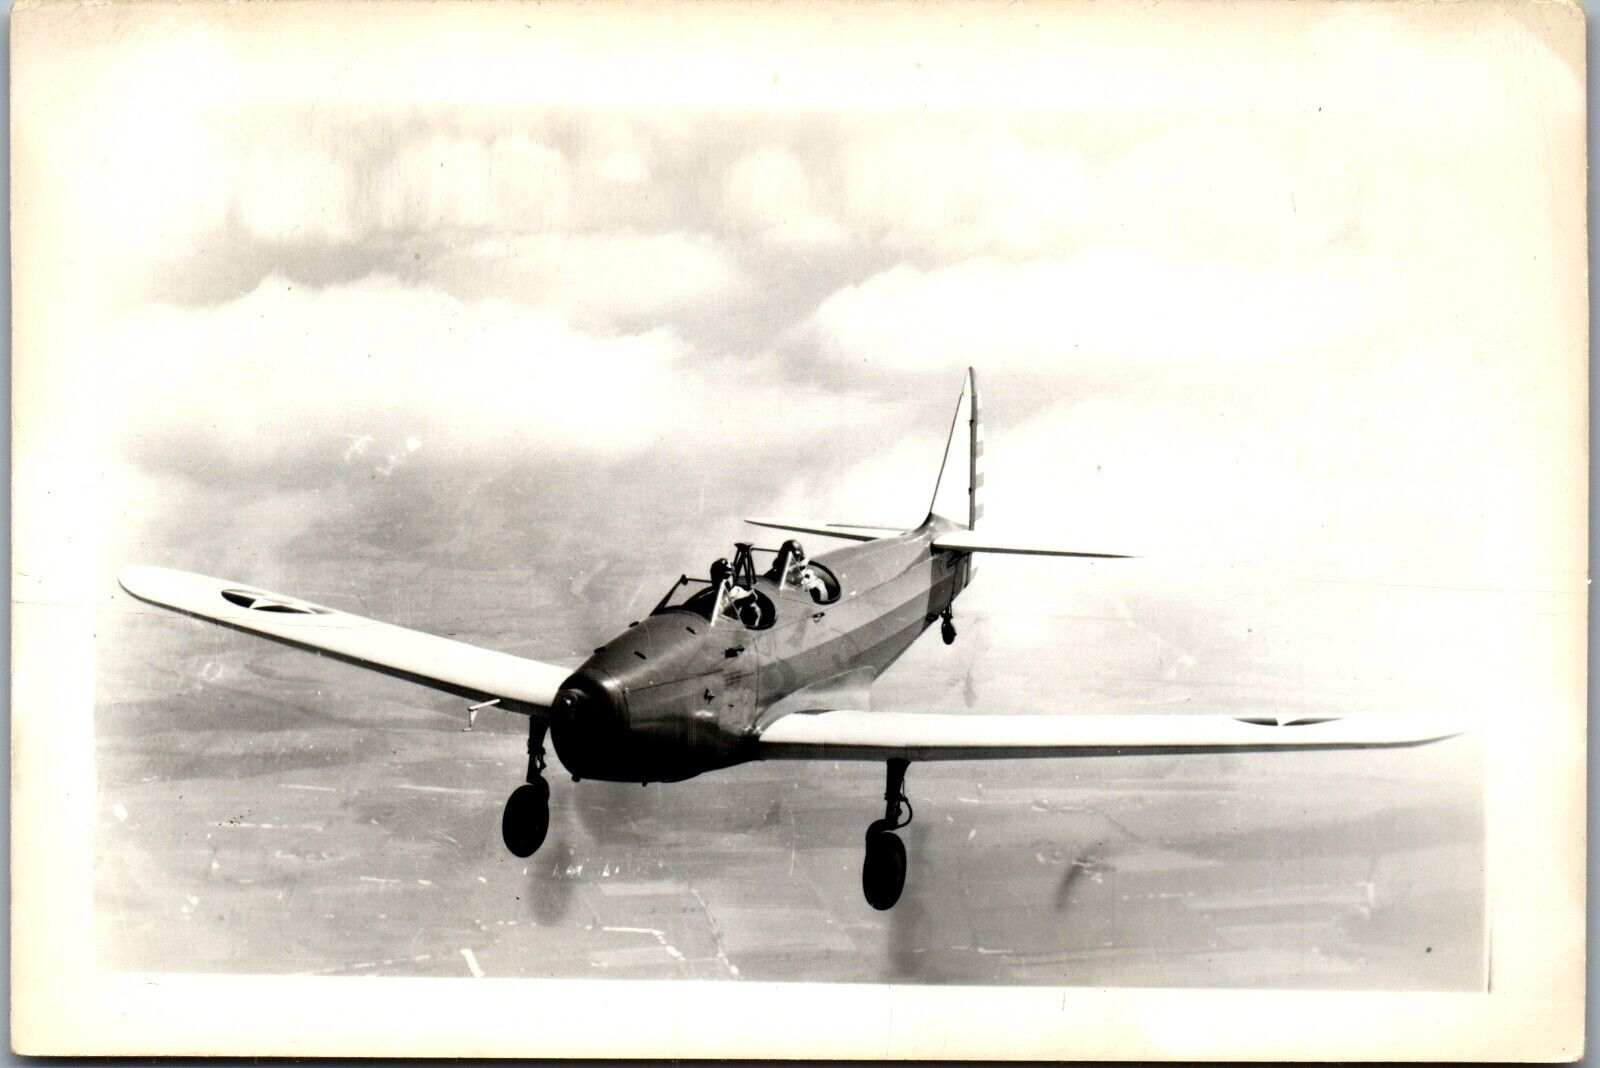 Fairchild PT-19 (M-62) Plane Reprint Photo (3 x 5)